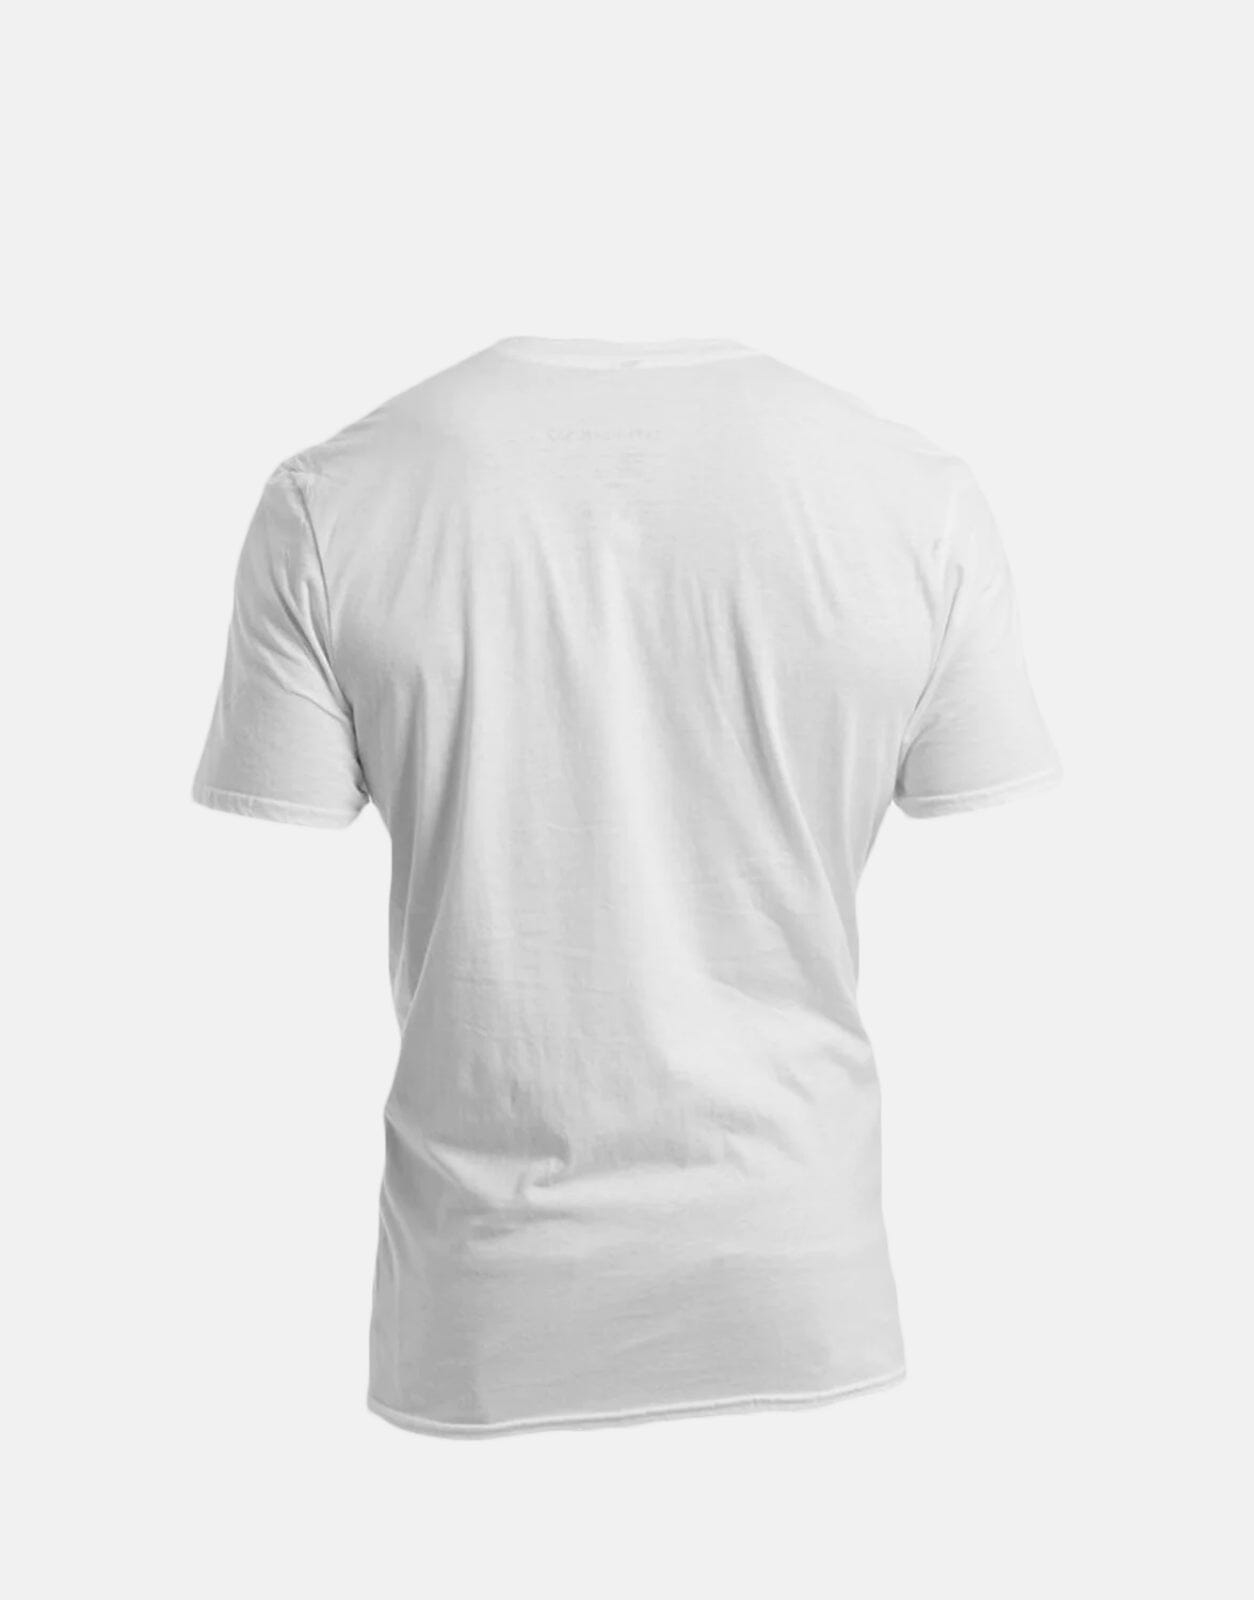 Vialli Foodies White T-Shirt - Subwear